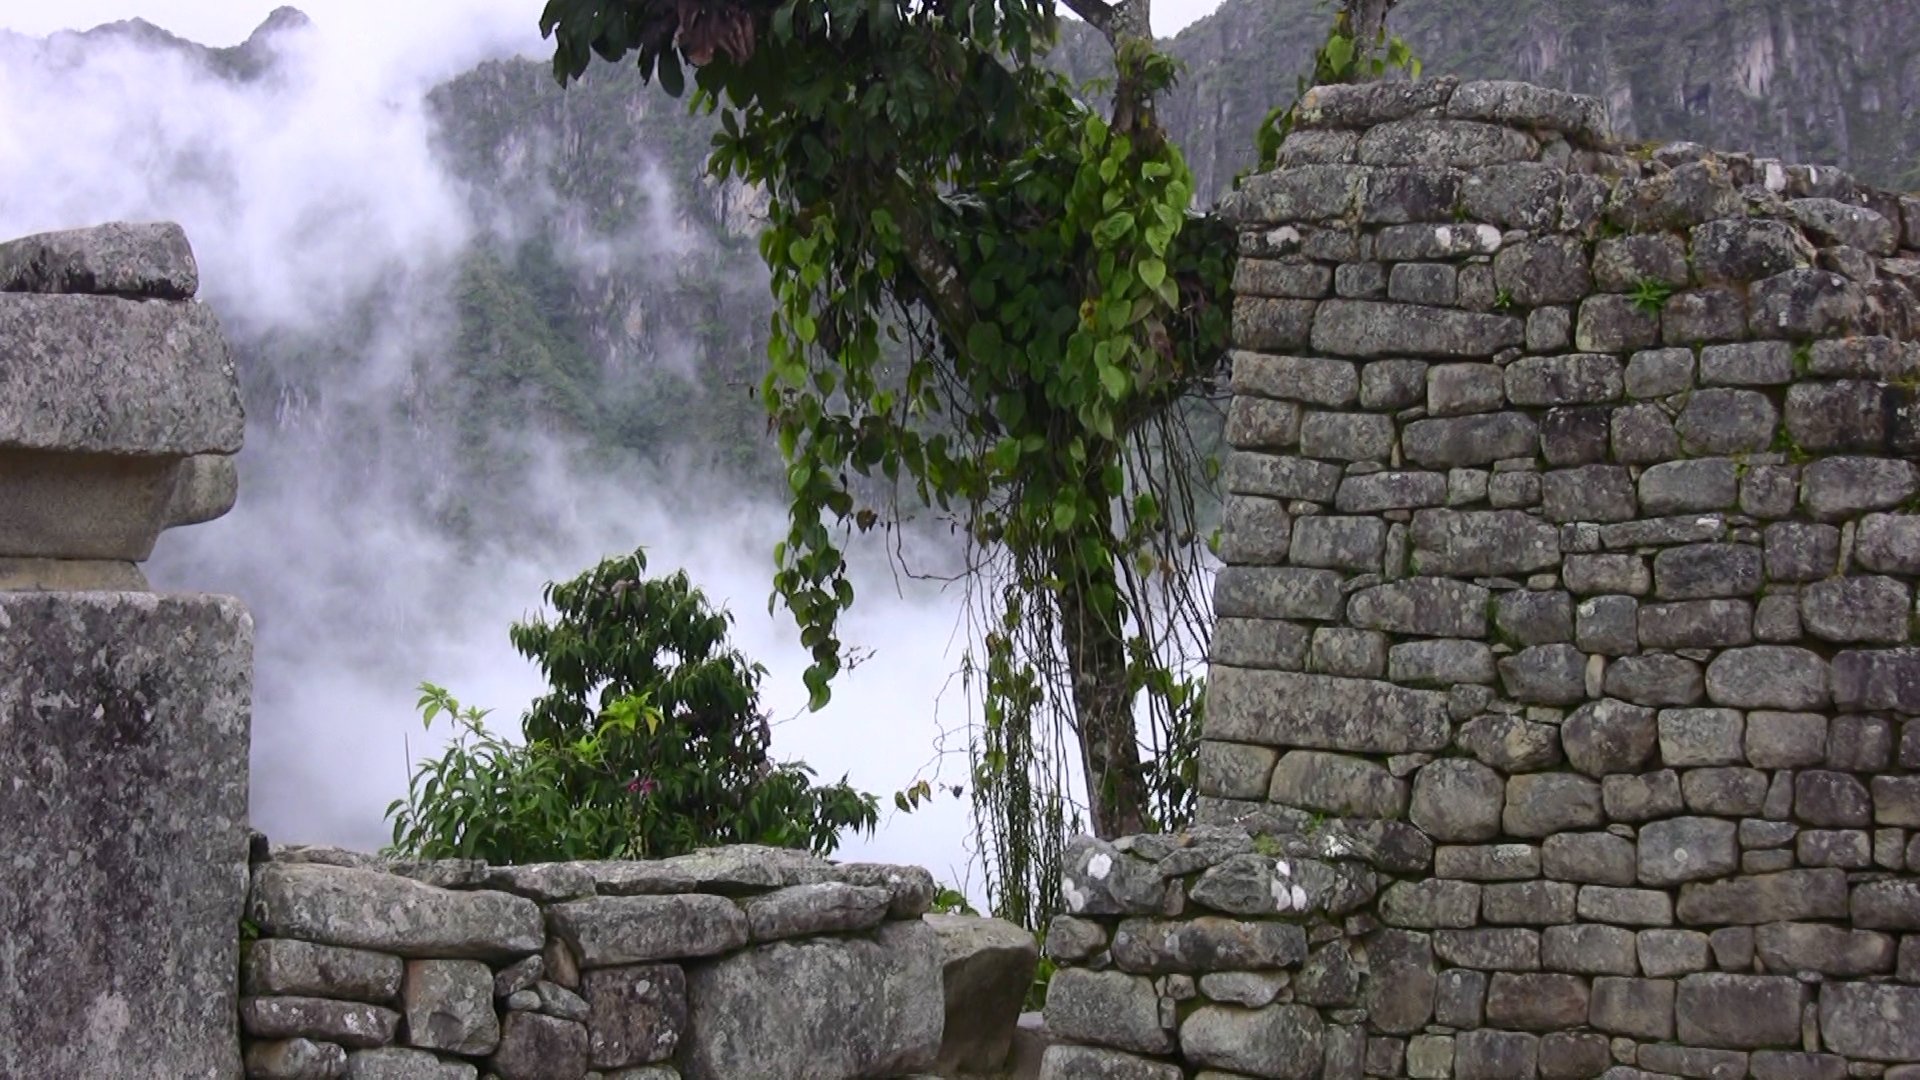 Download 1080p Machu Picchu desktop background ID:488700 for free